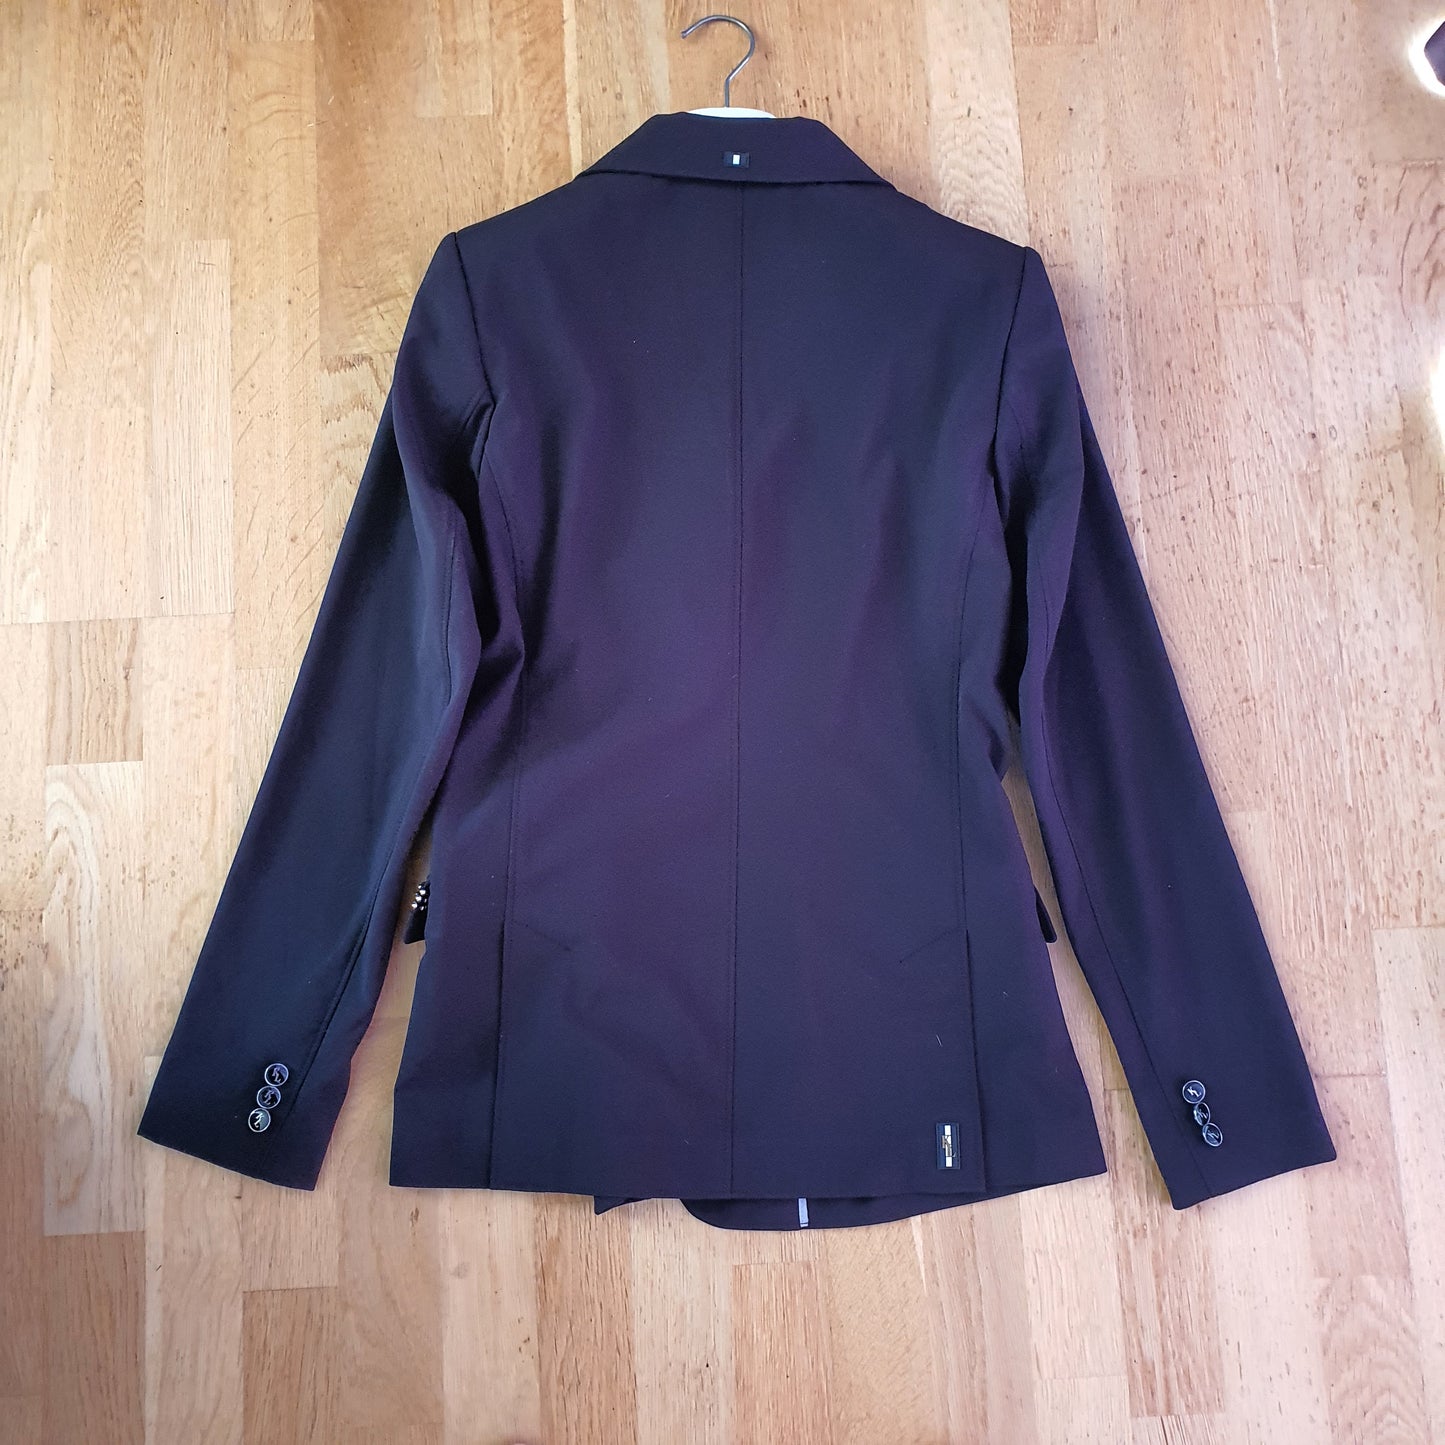 Kingsland black show jacket, ladies 12